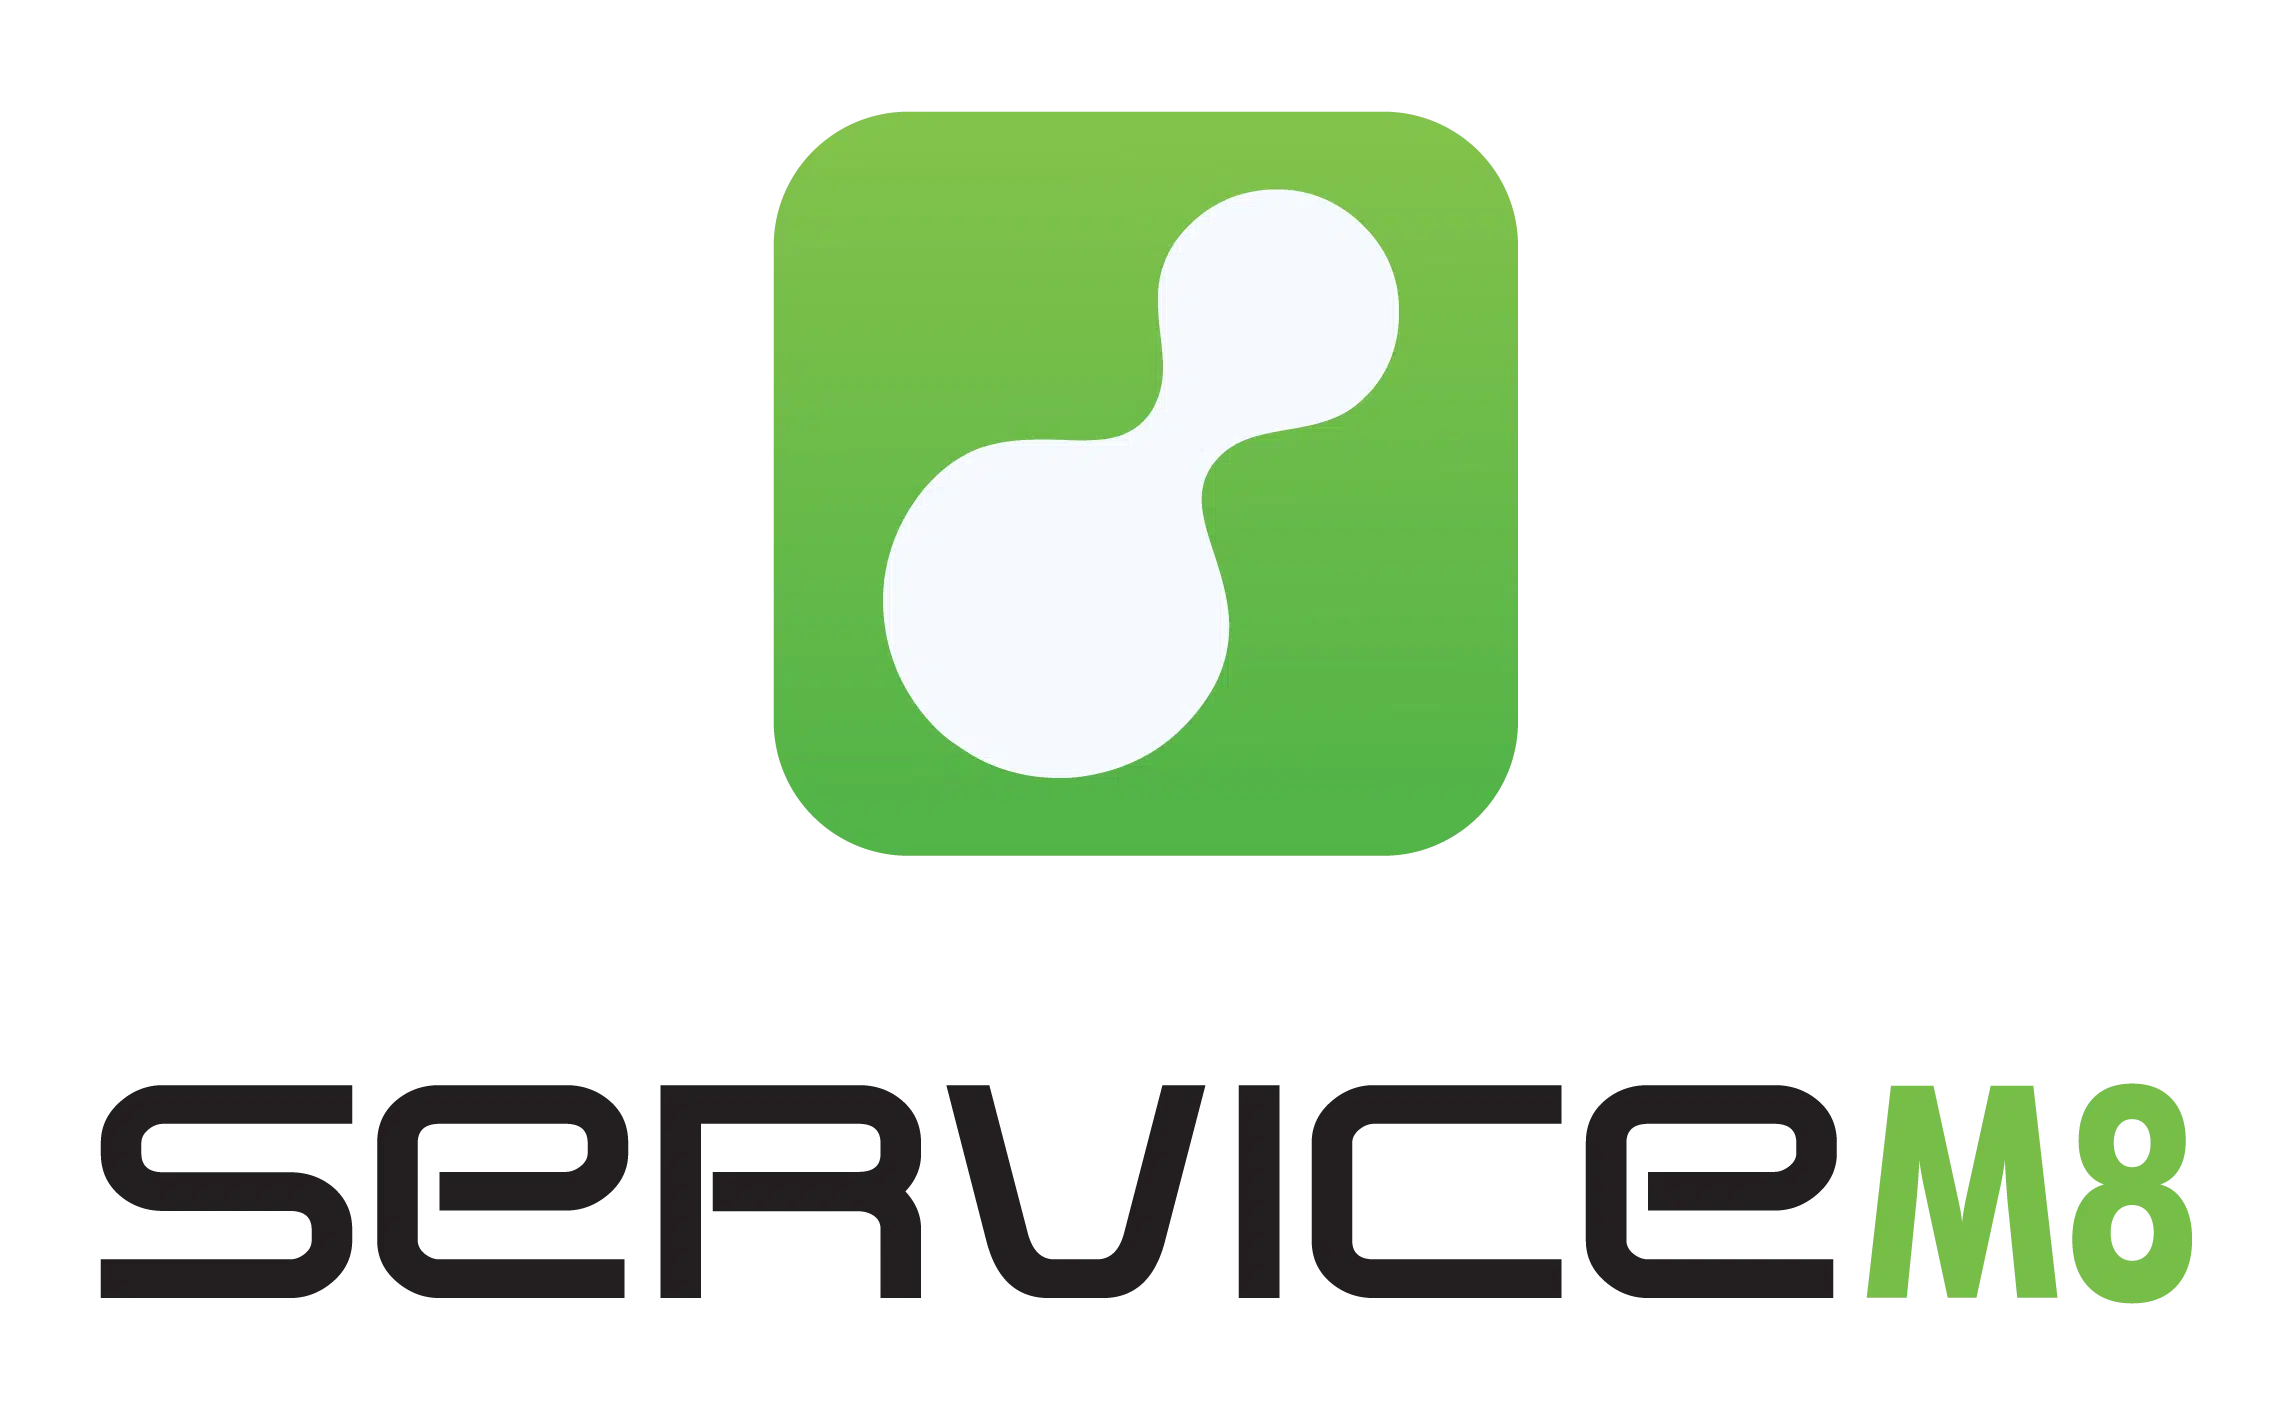 ServiceM8 logo